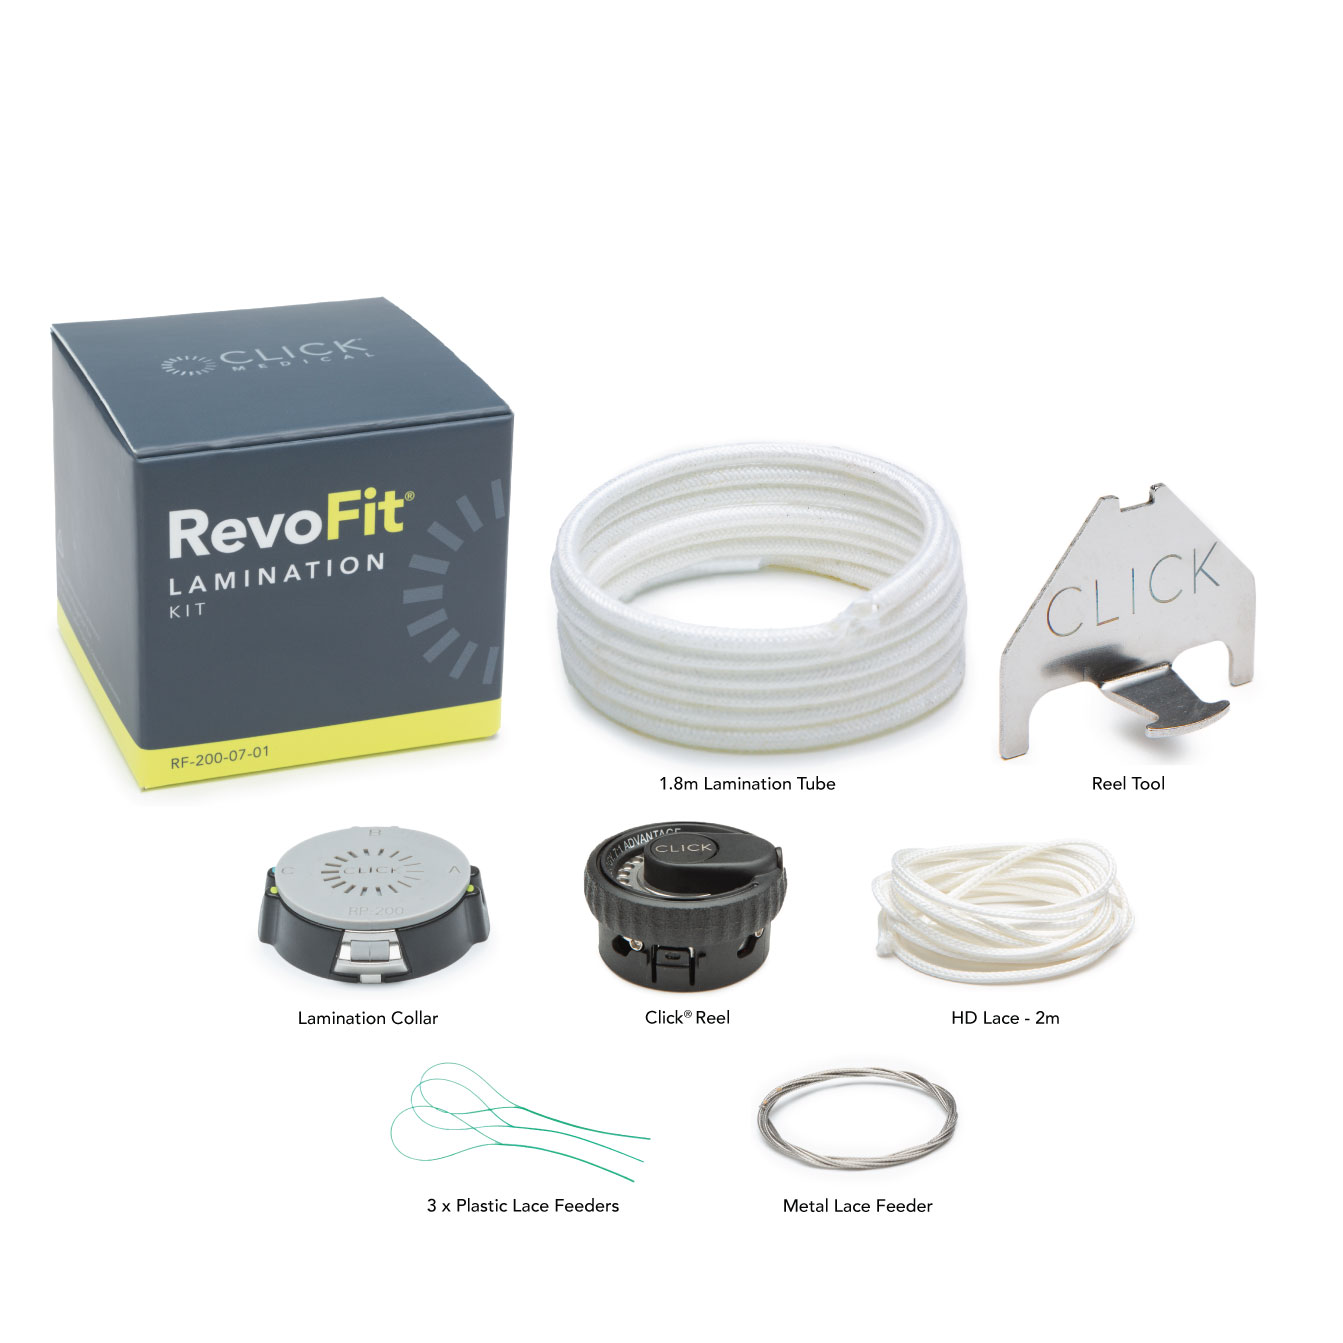 RevoFit Lamination Kit